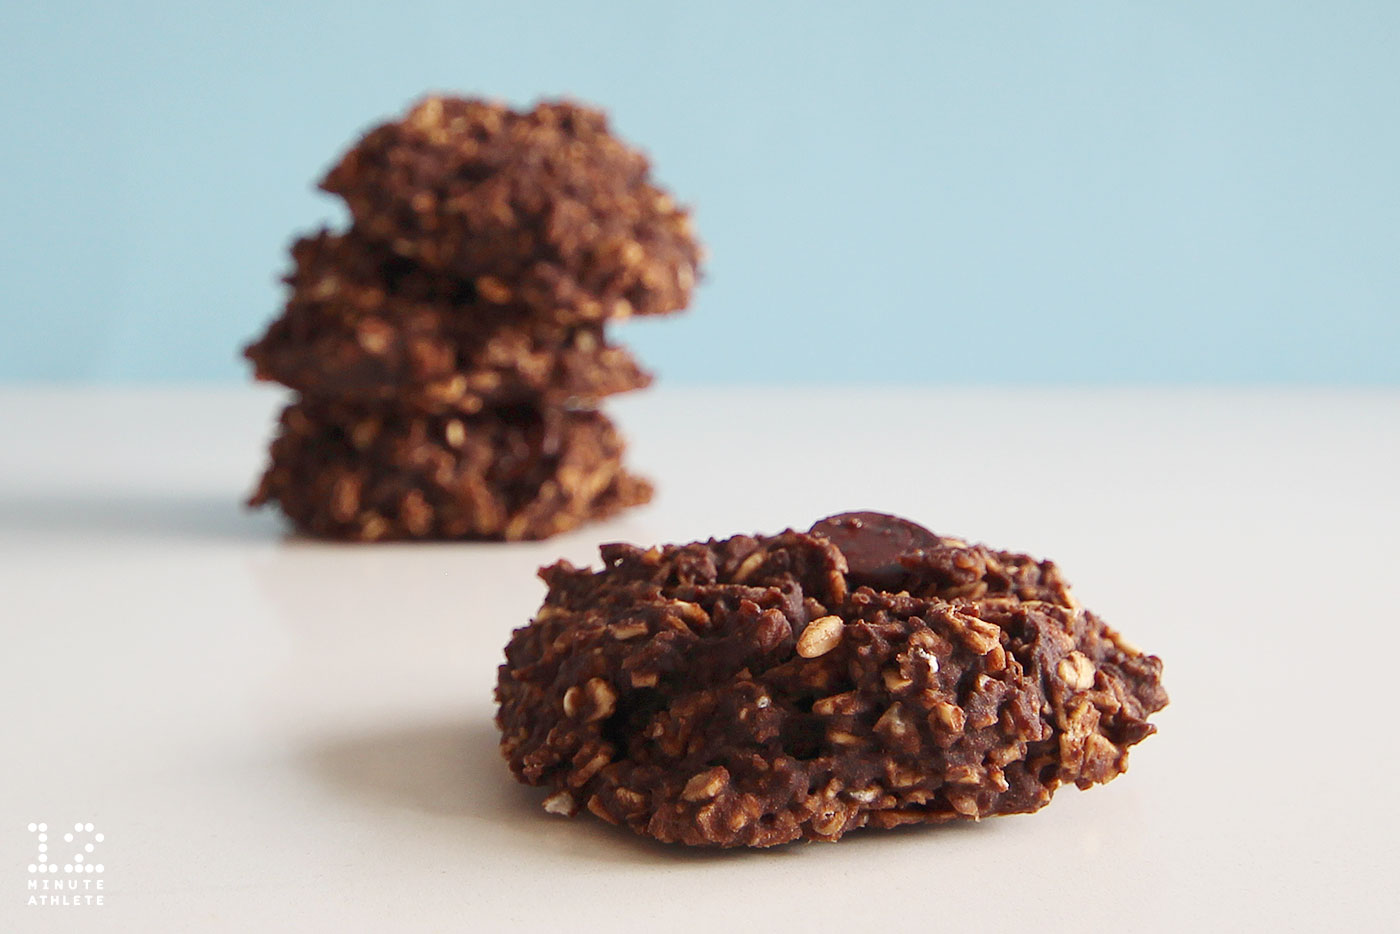 Double chocolate chip banana protein cookies (vegan & gluten-free!)